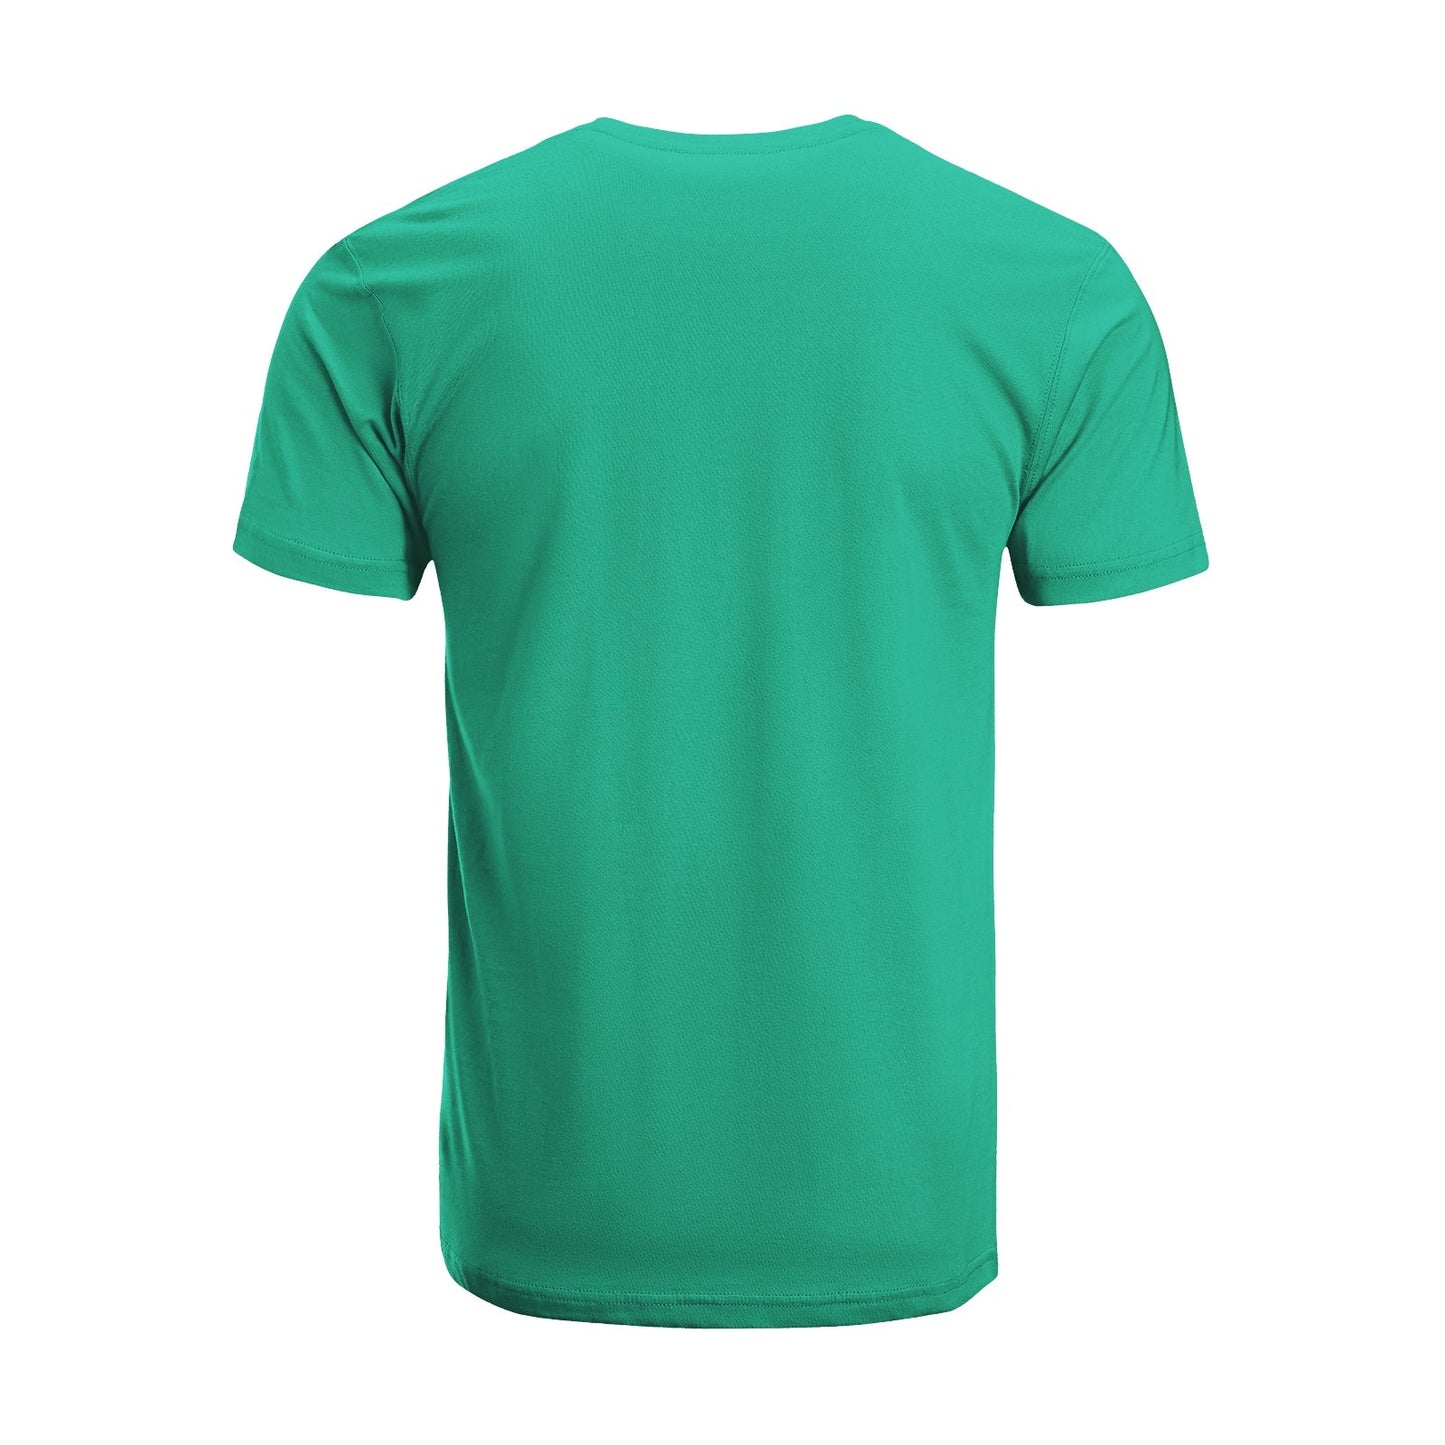 Unisex Short Sleeve Crew Neck Cotton Jersey T-Shirt DOG 49